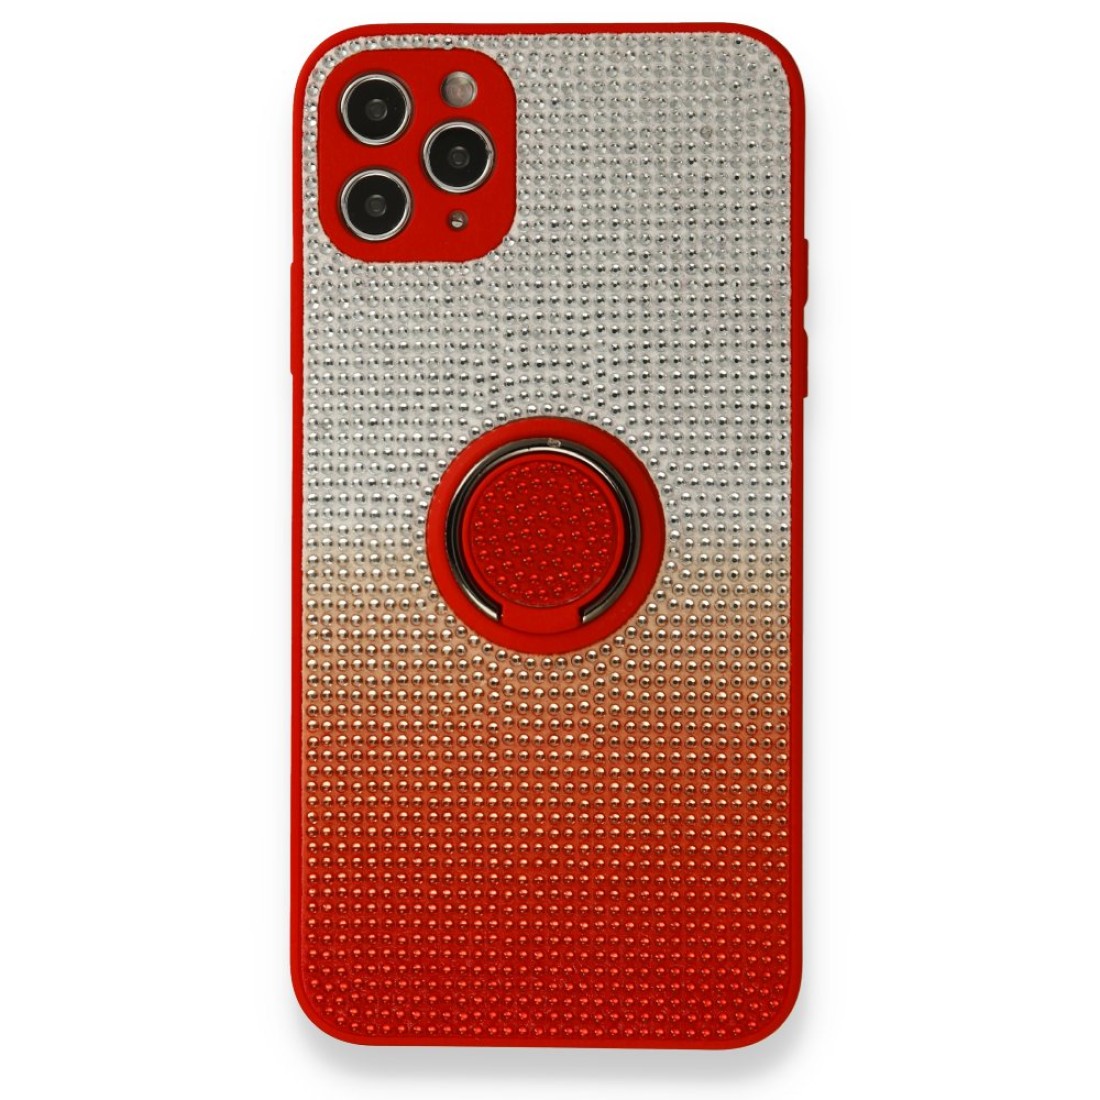 Apple iPhone 11 Pro Max Kılıf Daytona Yüzüklü Taşlı Silikon - Kırmızı